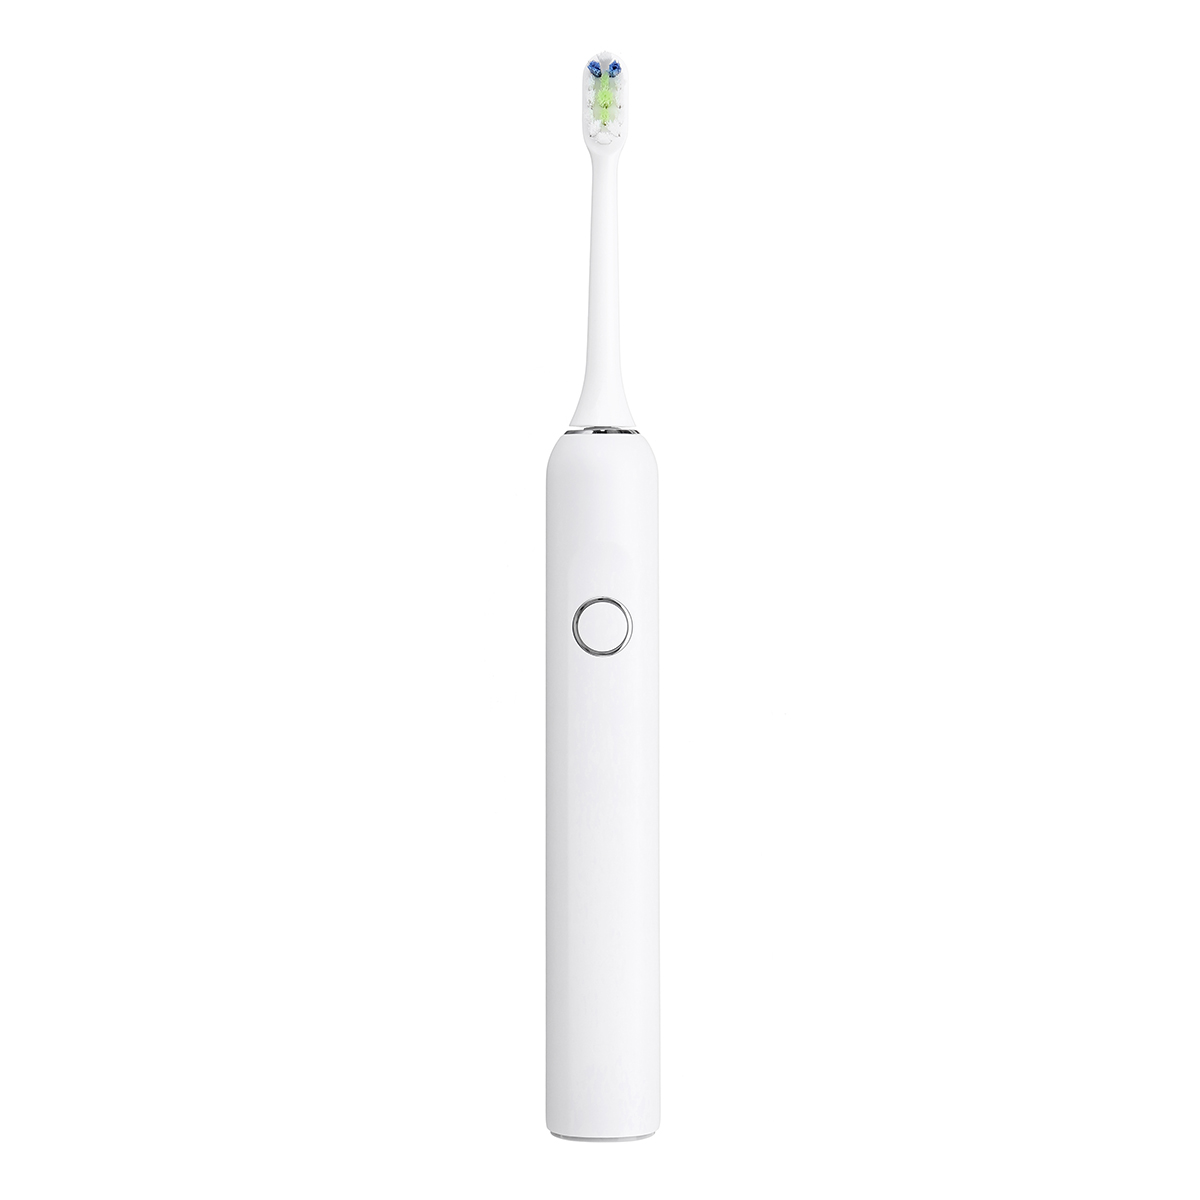 Waterproof-Rechargeable-Sonic-Electrric-Toothbrush-Upgraded-Ultrasonic-Electric-Toothbrush-1361114-7